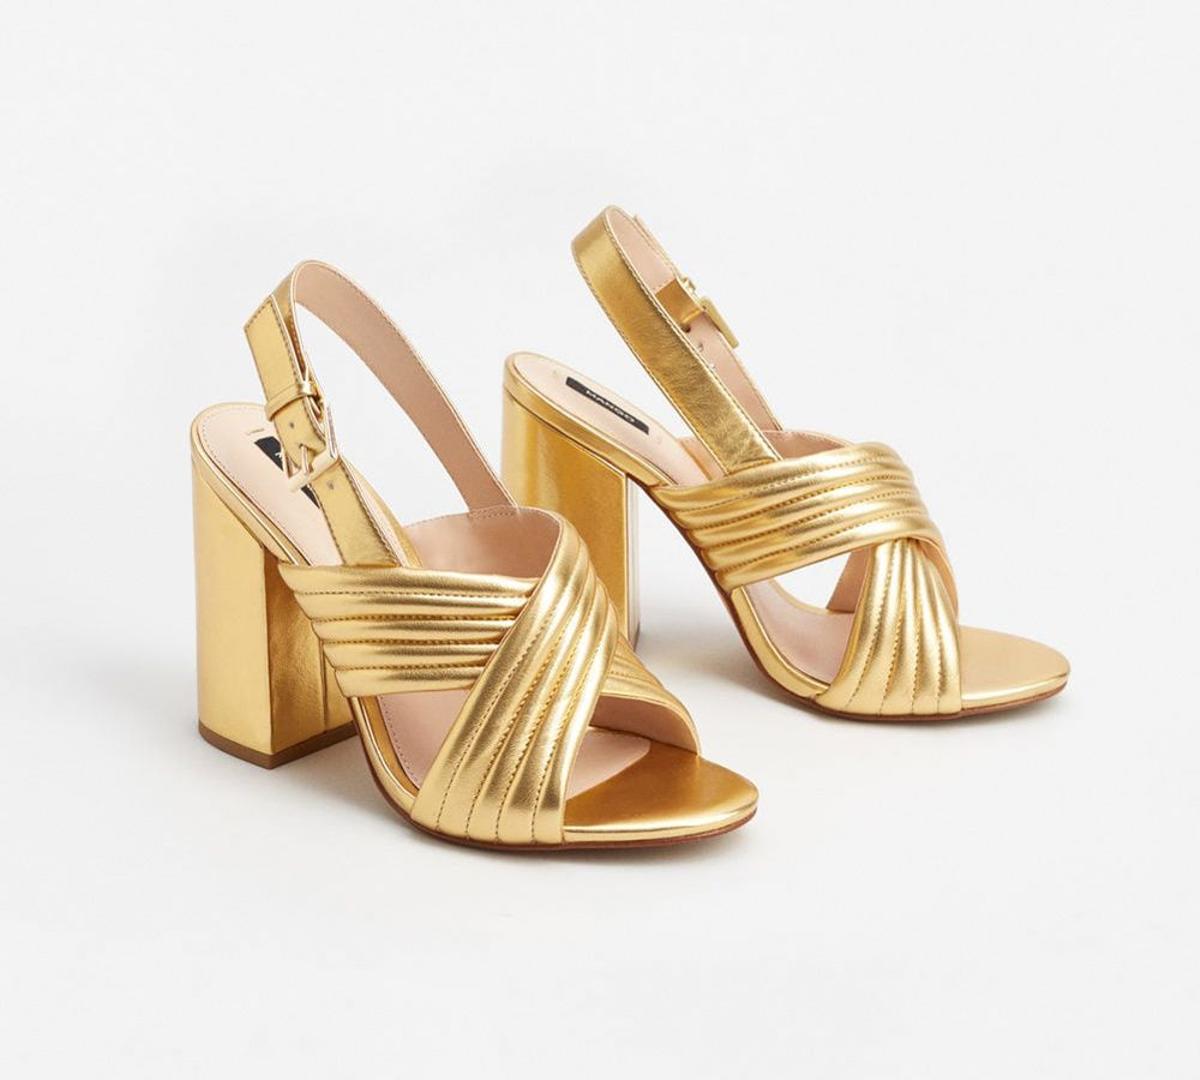 Zapatos de invitada: sandalia dorada